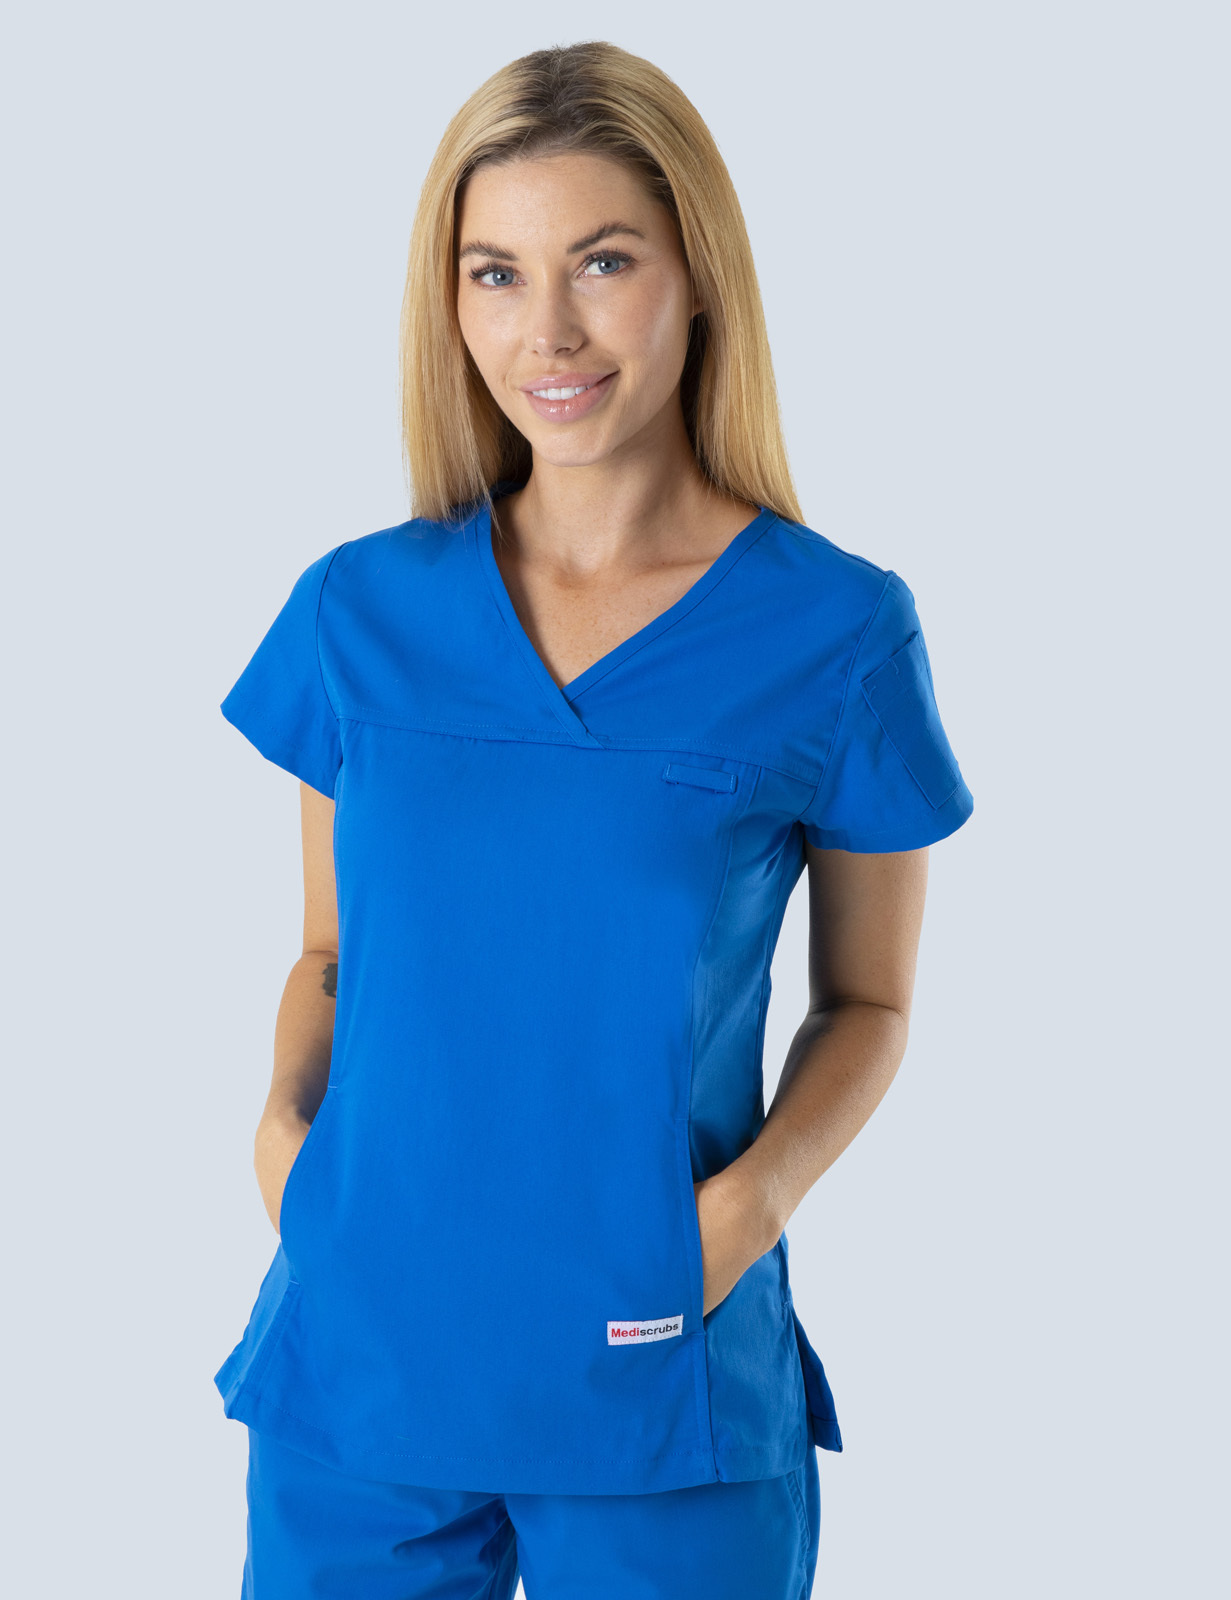 Queensland Children's Hospital Emergency Department Registered  Nurse  Uniform Top Bundle  (Women's Fit Top in Royal incl Logos)